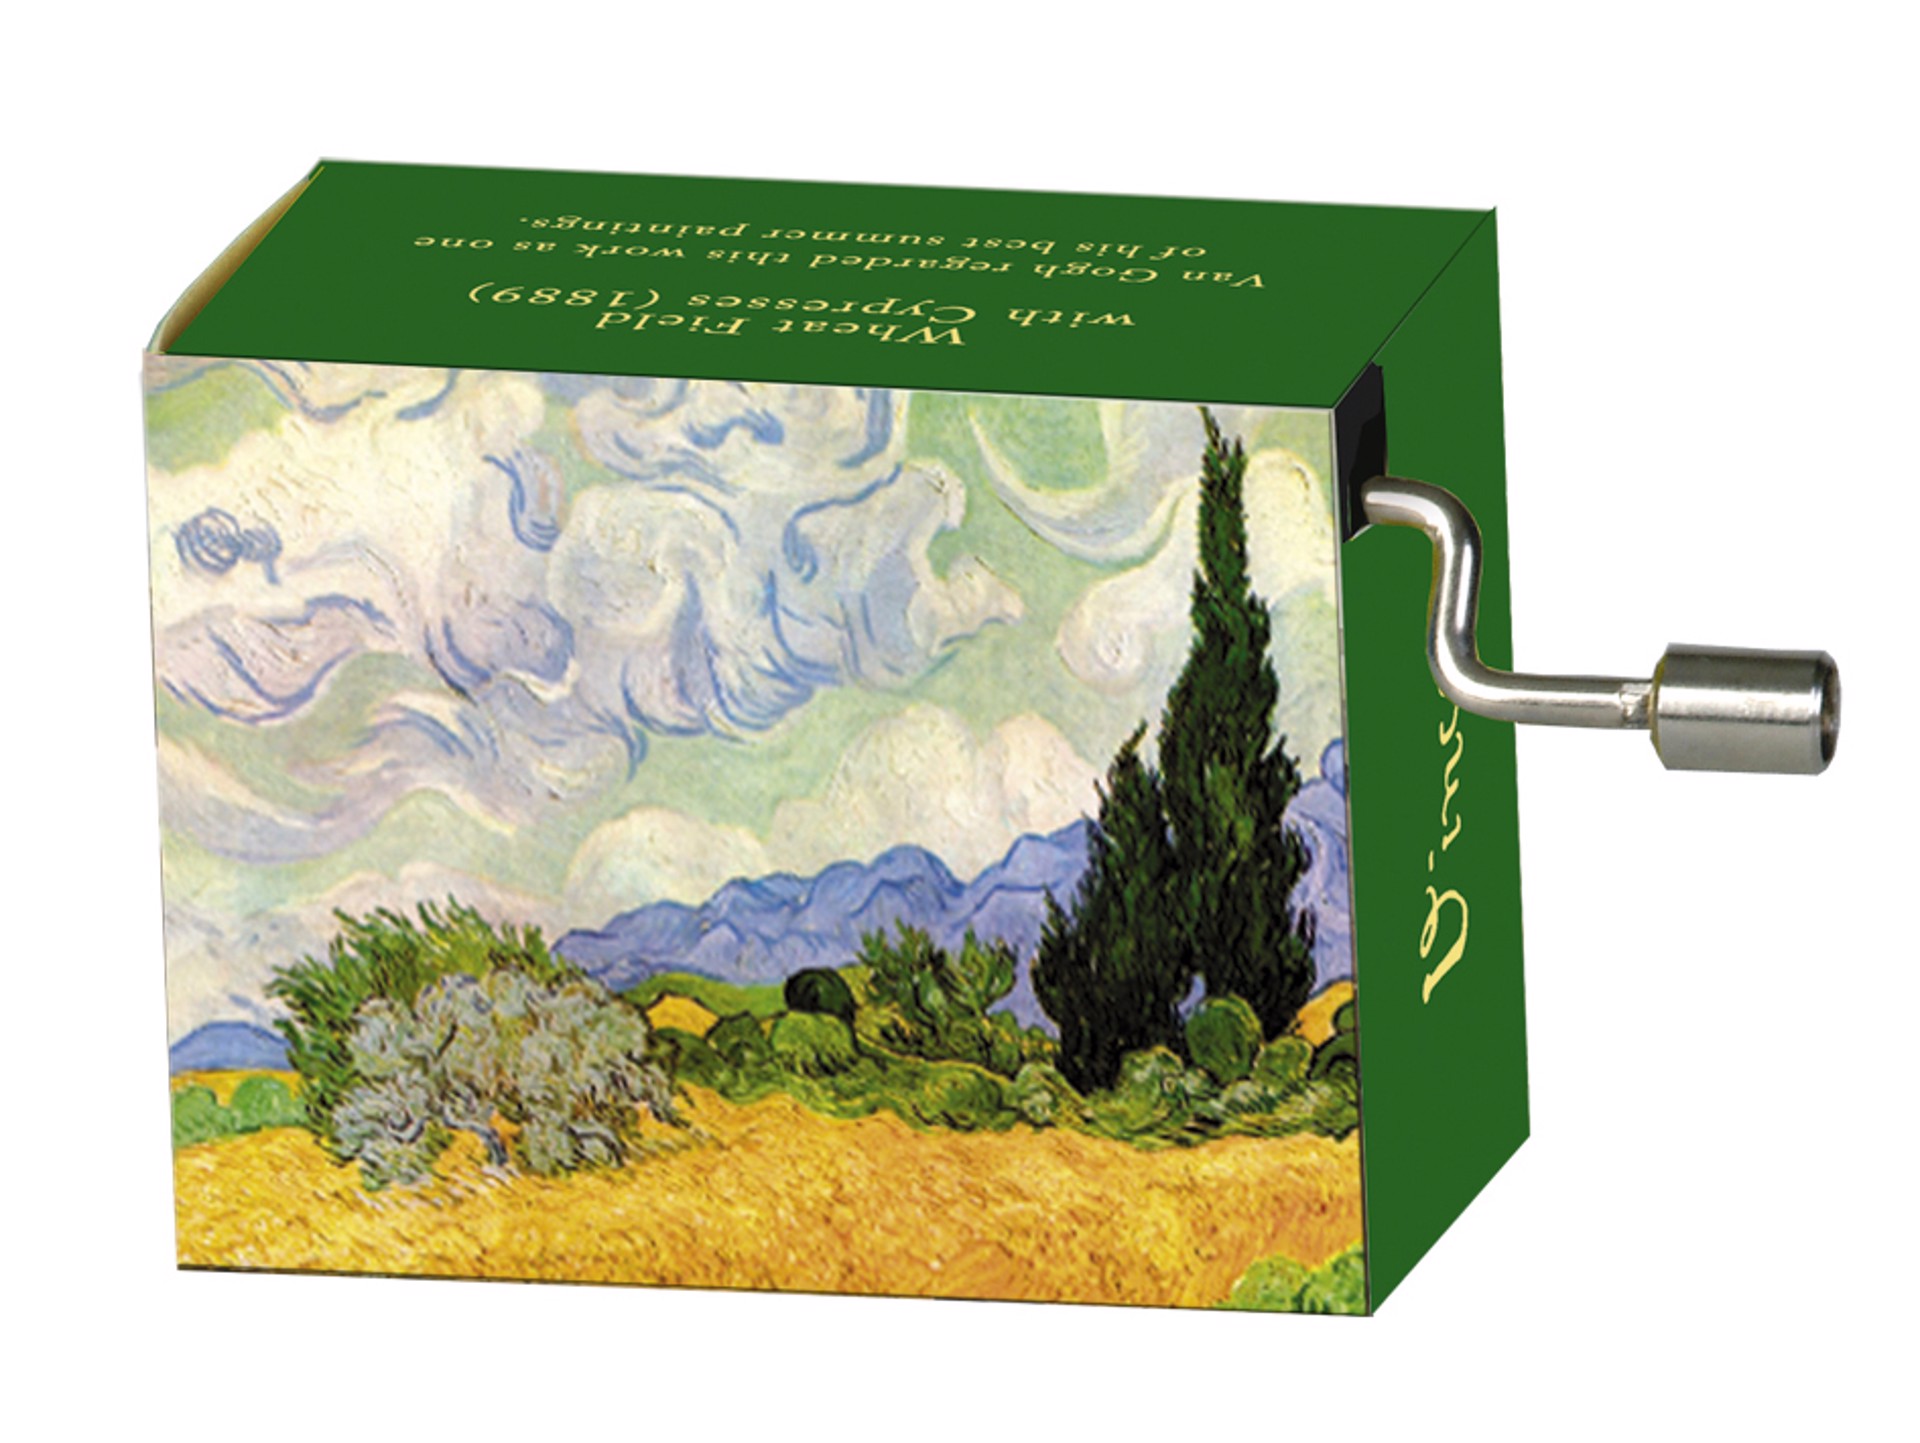 Music Box - Van Gogh, Vivaldi by Chauvet Arts